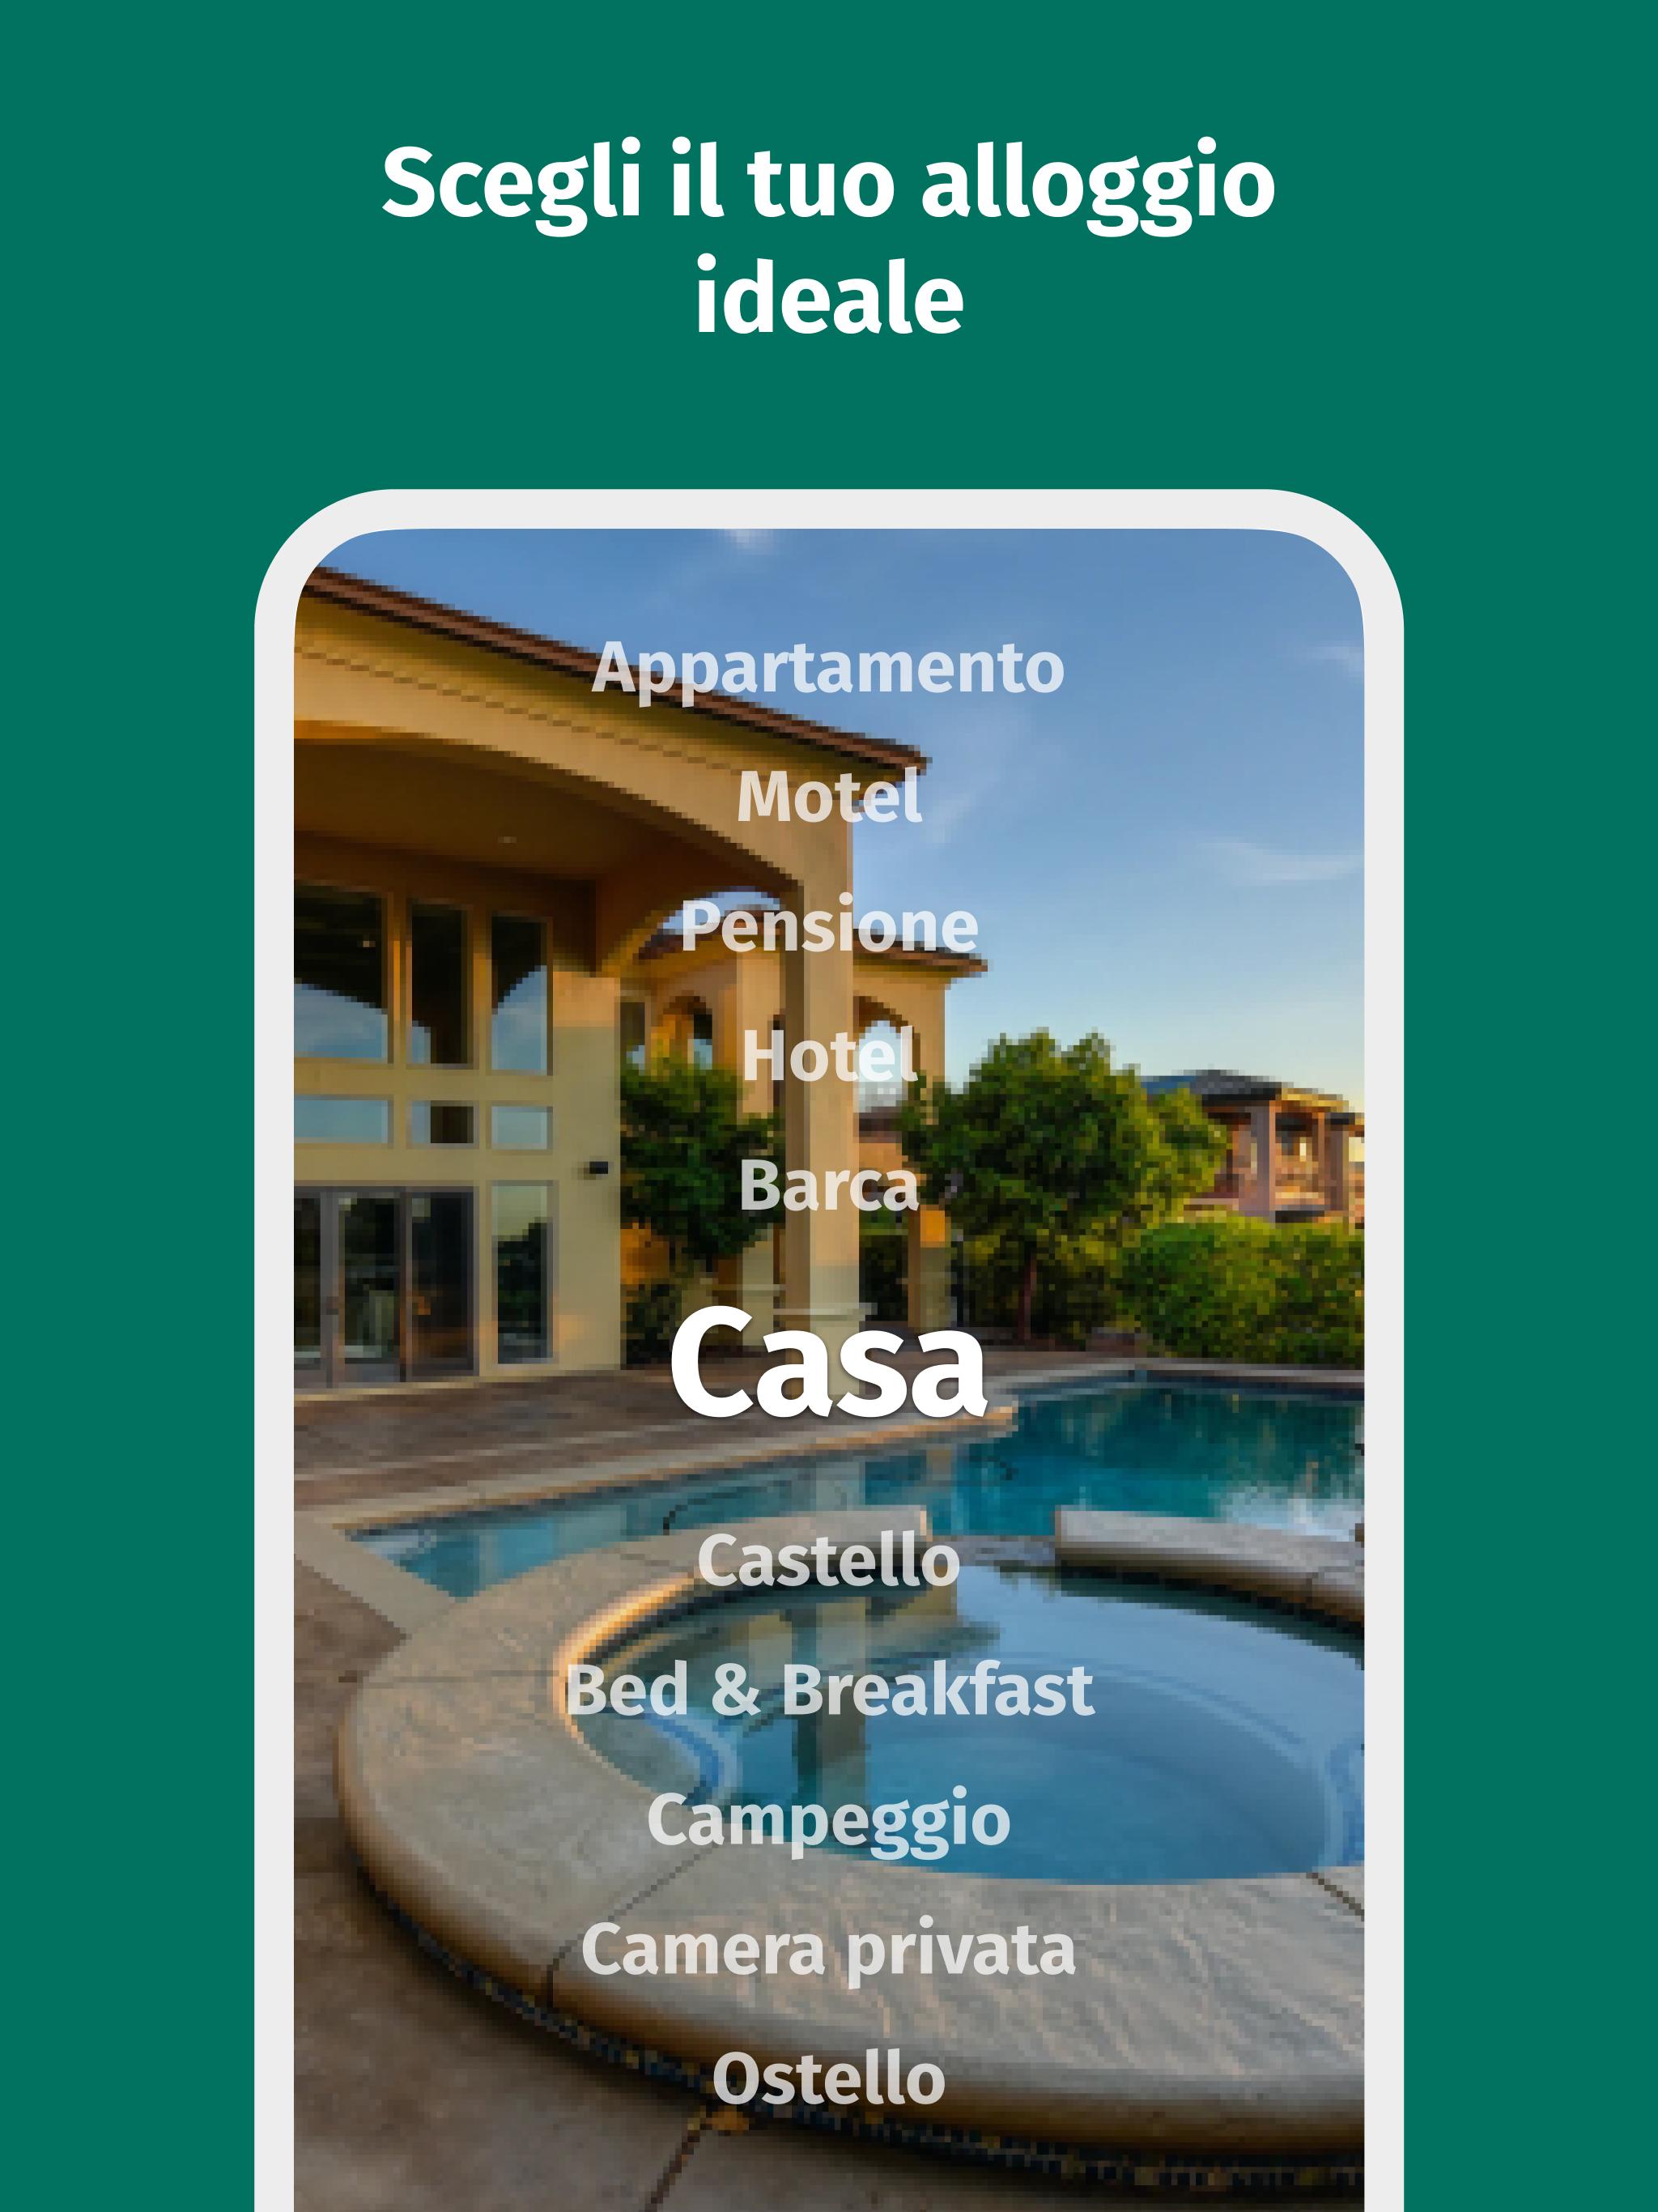 CaseVacanza.it Cerca case vacanza in affitto 1.2.0 Screenshot 16